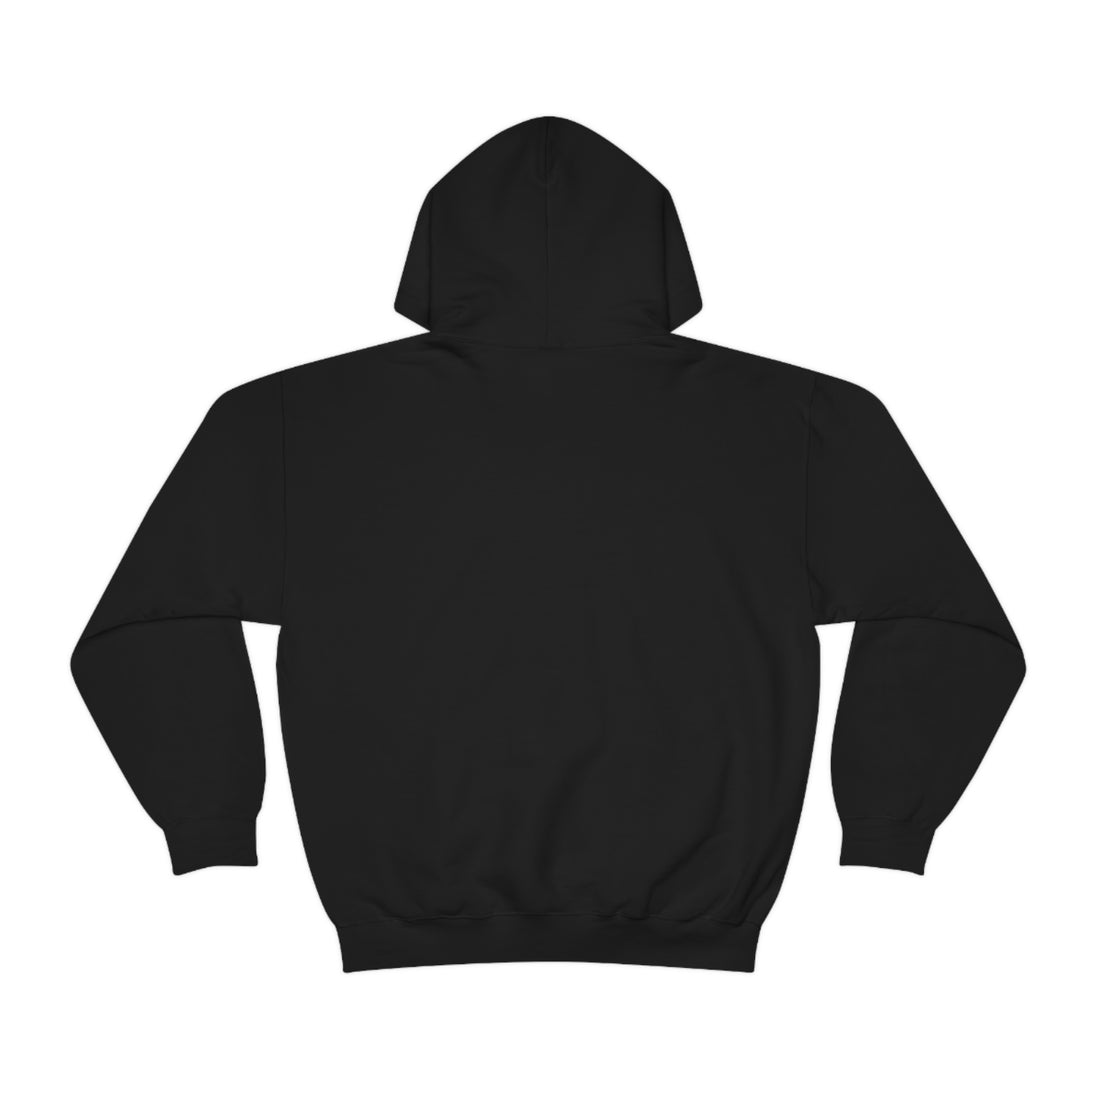 Soon To Be Mommy - Unisex Heavy Blend™ Hooded Sweatshirt